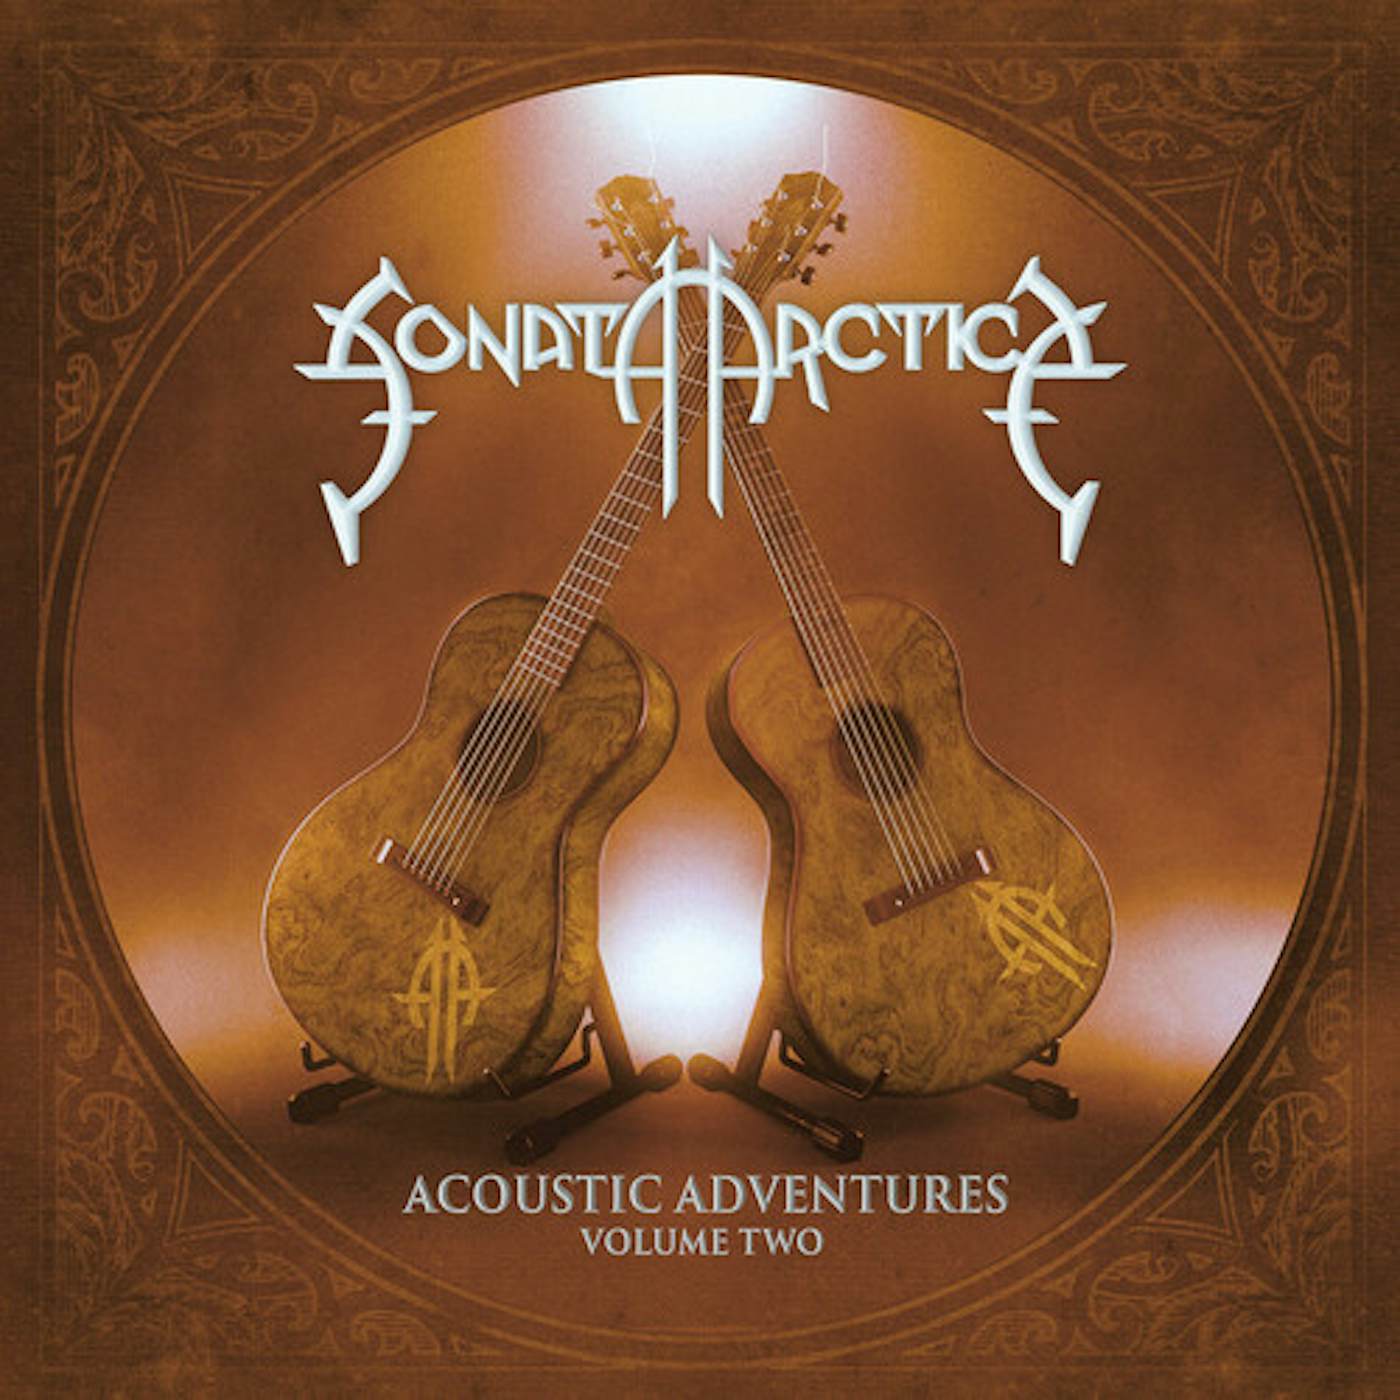 Sonata Arctica ACOUSTIC ADVENTURES - VOLUME TWO CD